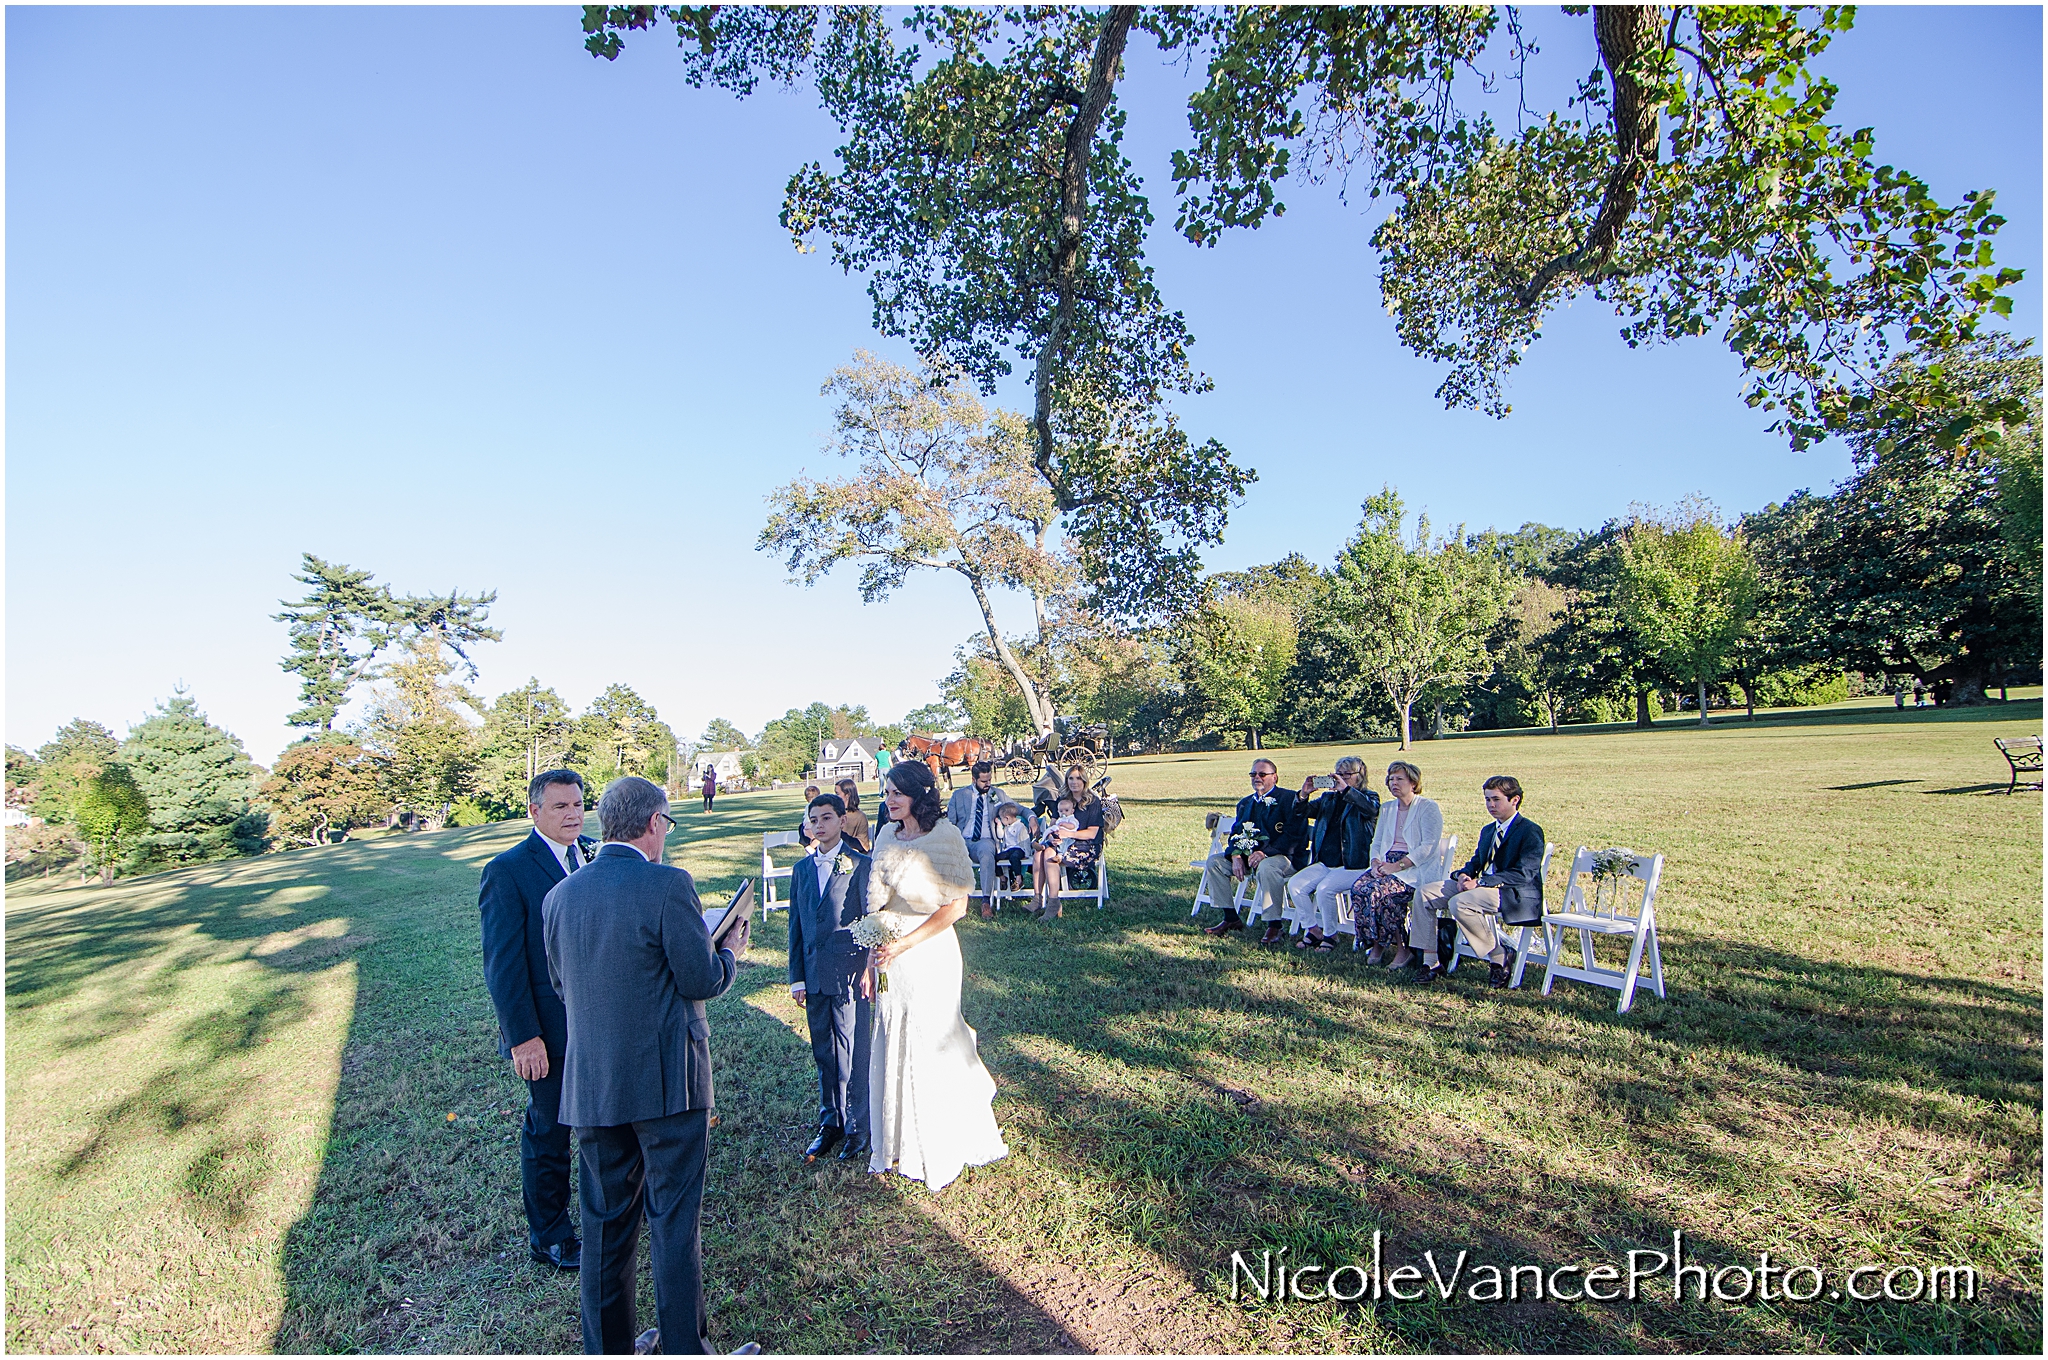 The wedding ceremony at Maymont Park in Richmond, VA.